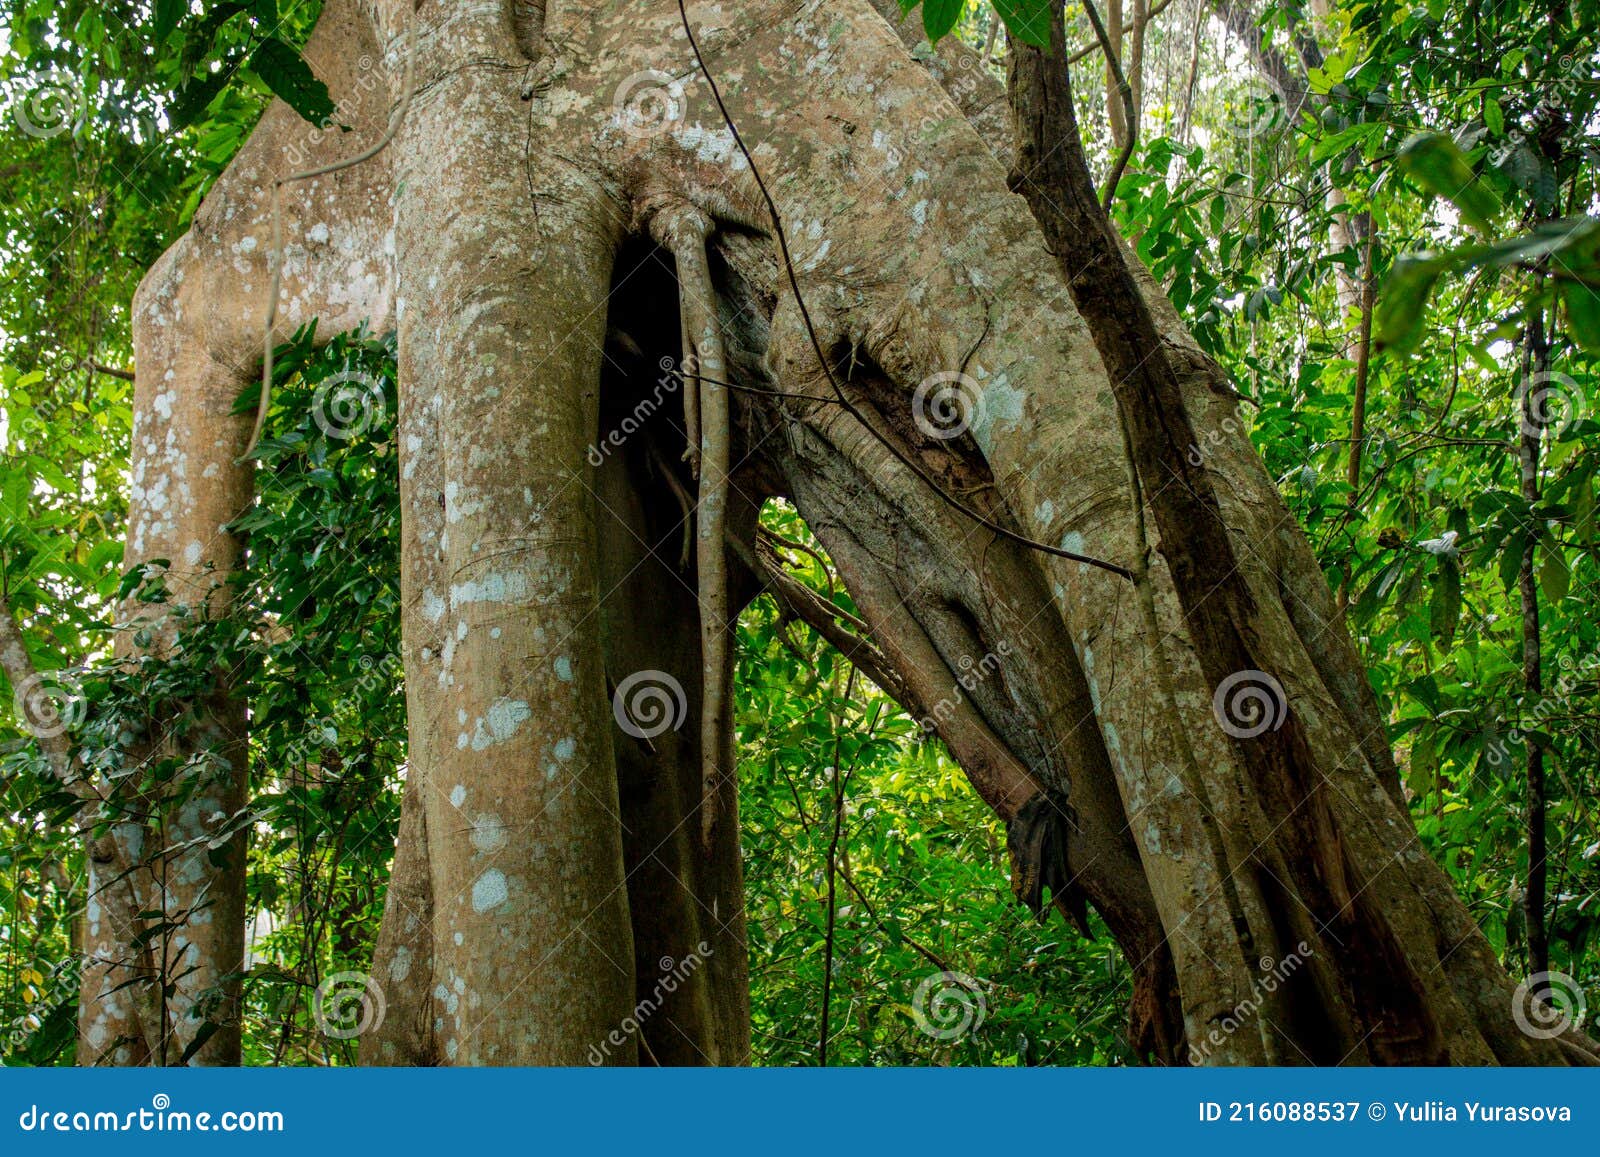 jungle forest tree tropical rainforest